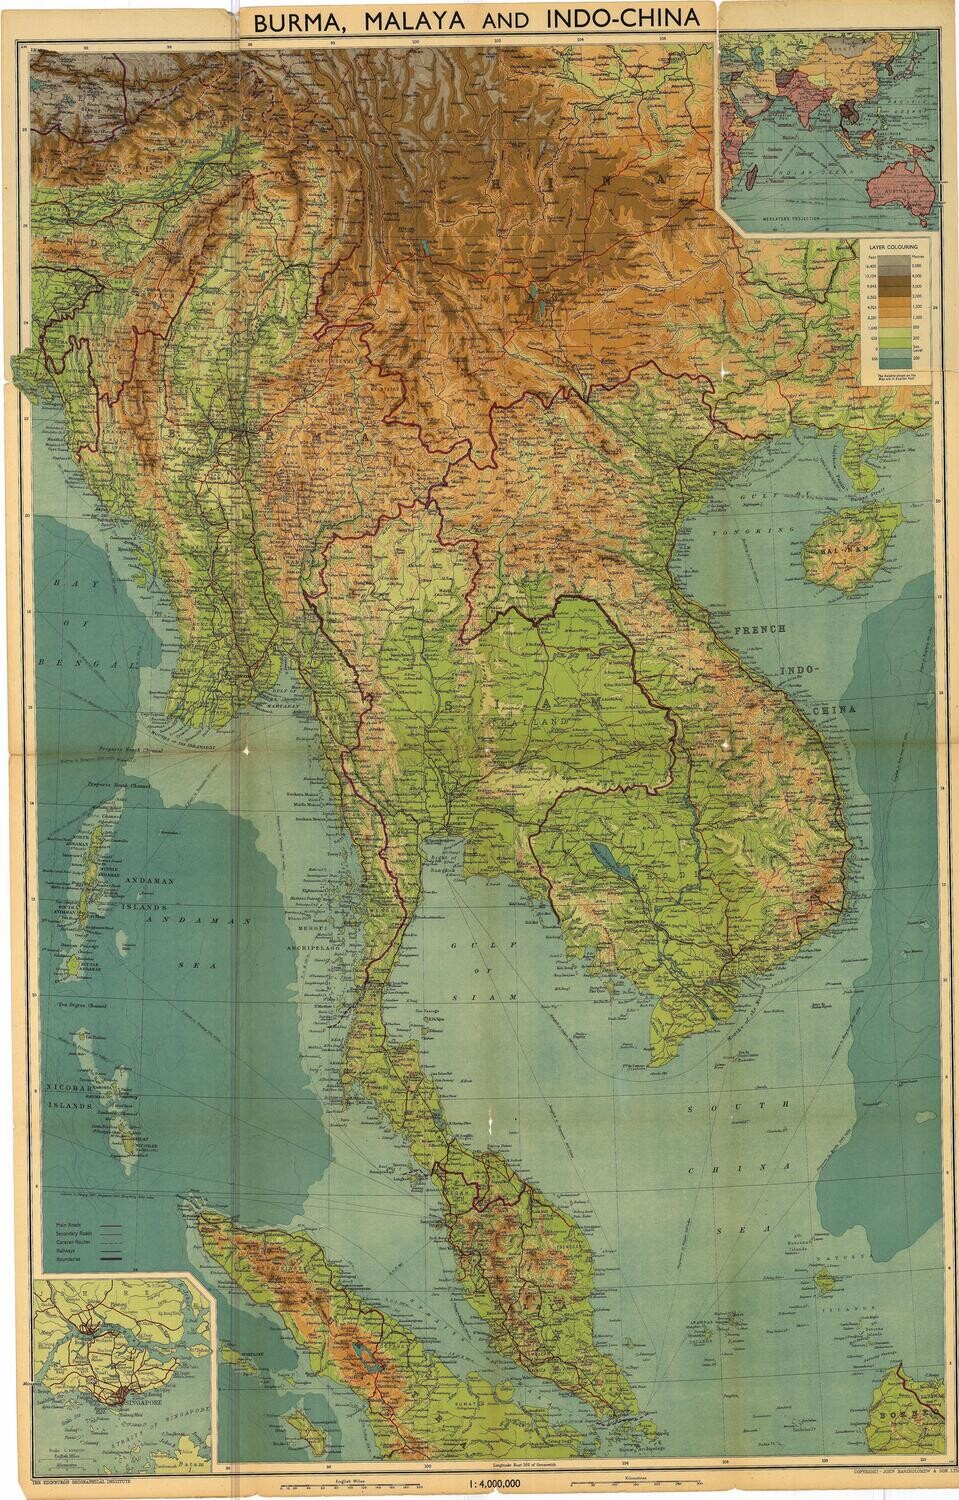 1948 Burma, Malaya and IndoChina Folding Map by Bartholomew